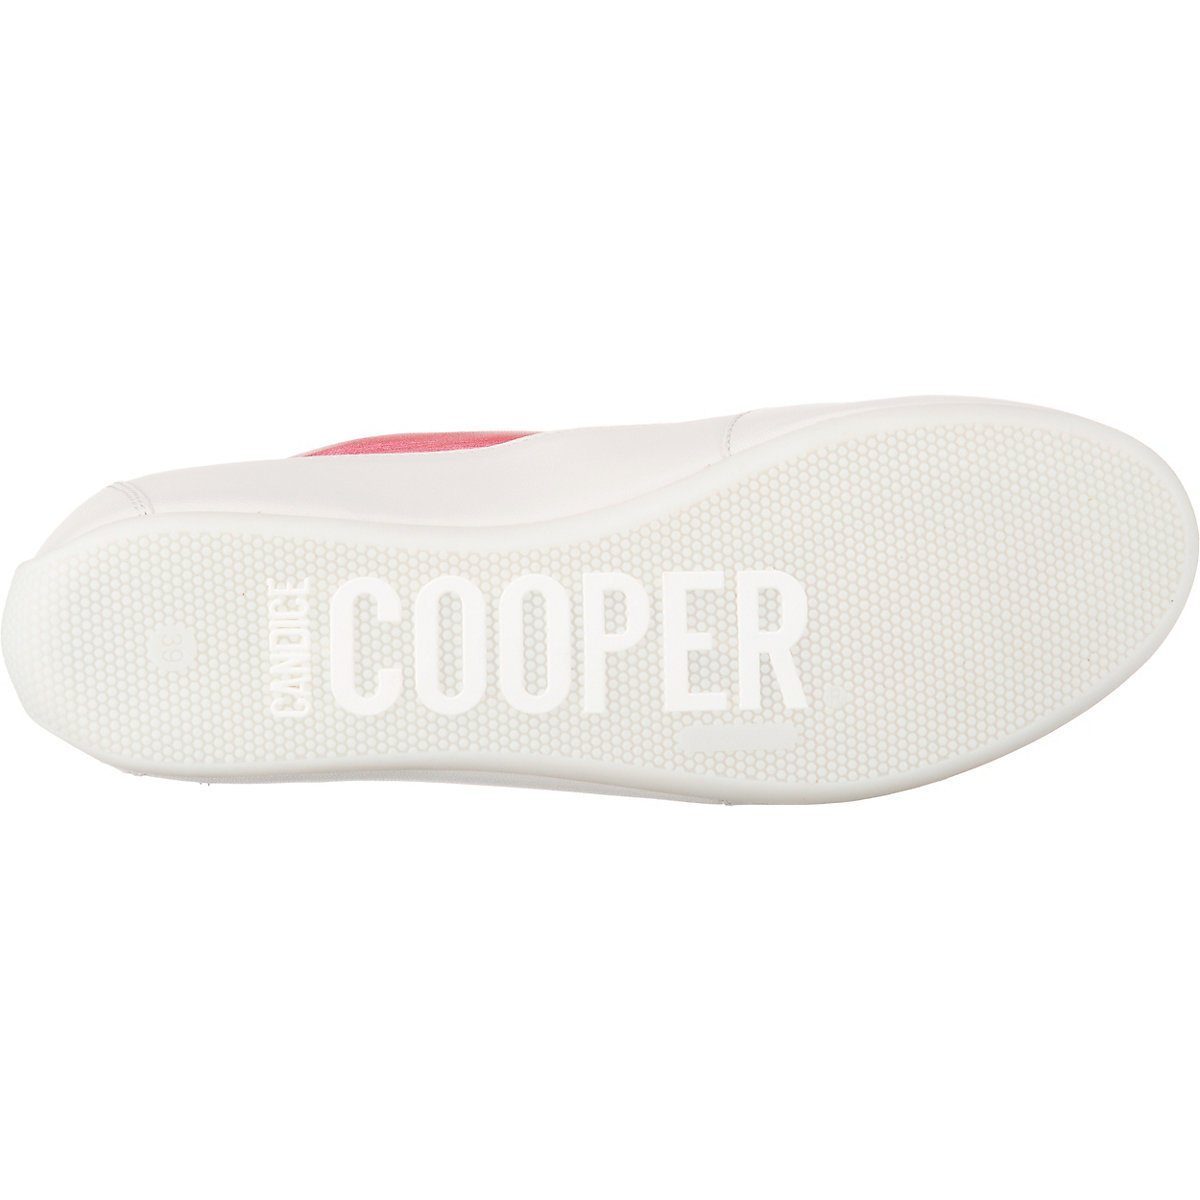 Schuhe Sneaker Candice Cooper Rock-ginevra Sneakers Low Sneaker